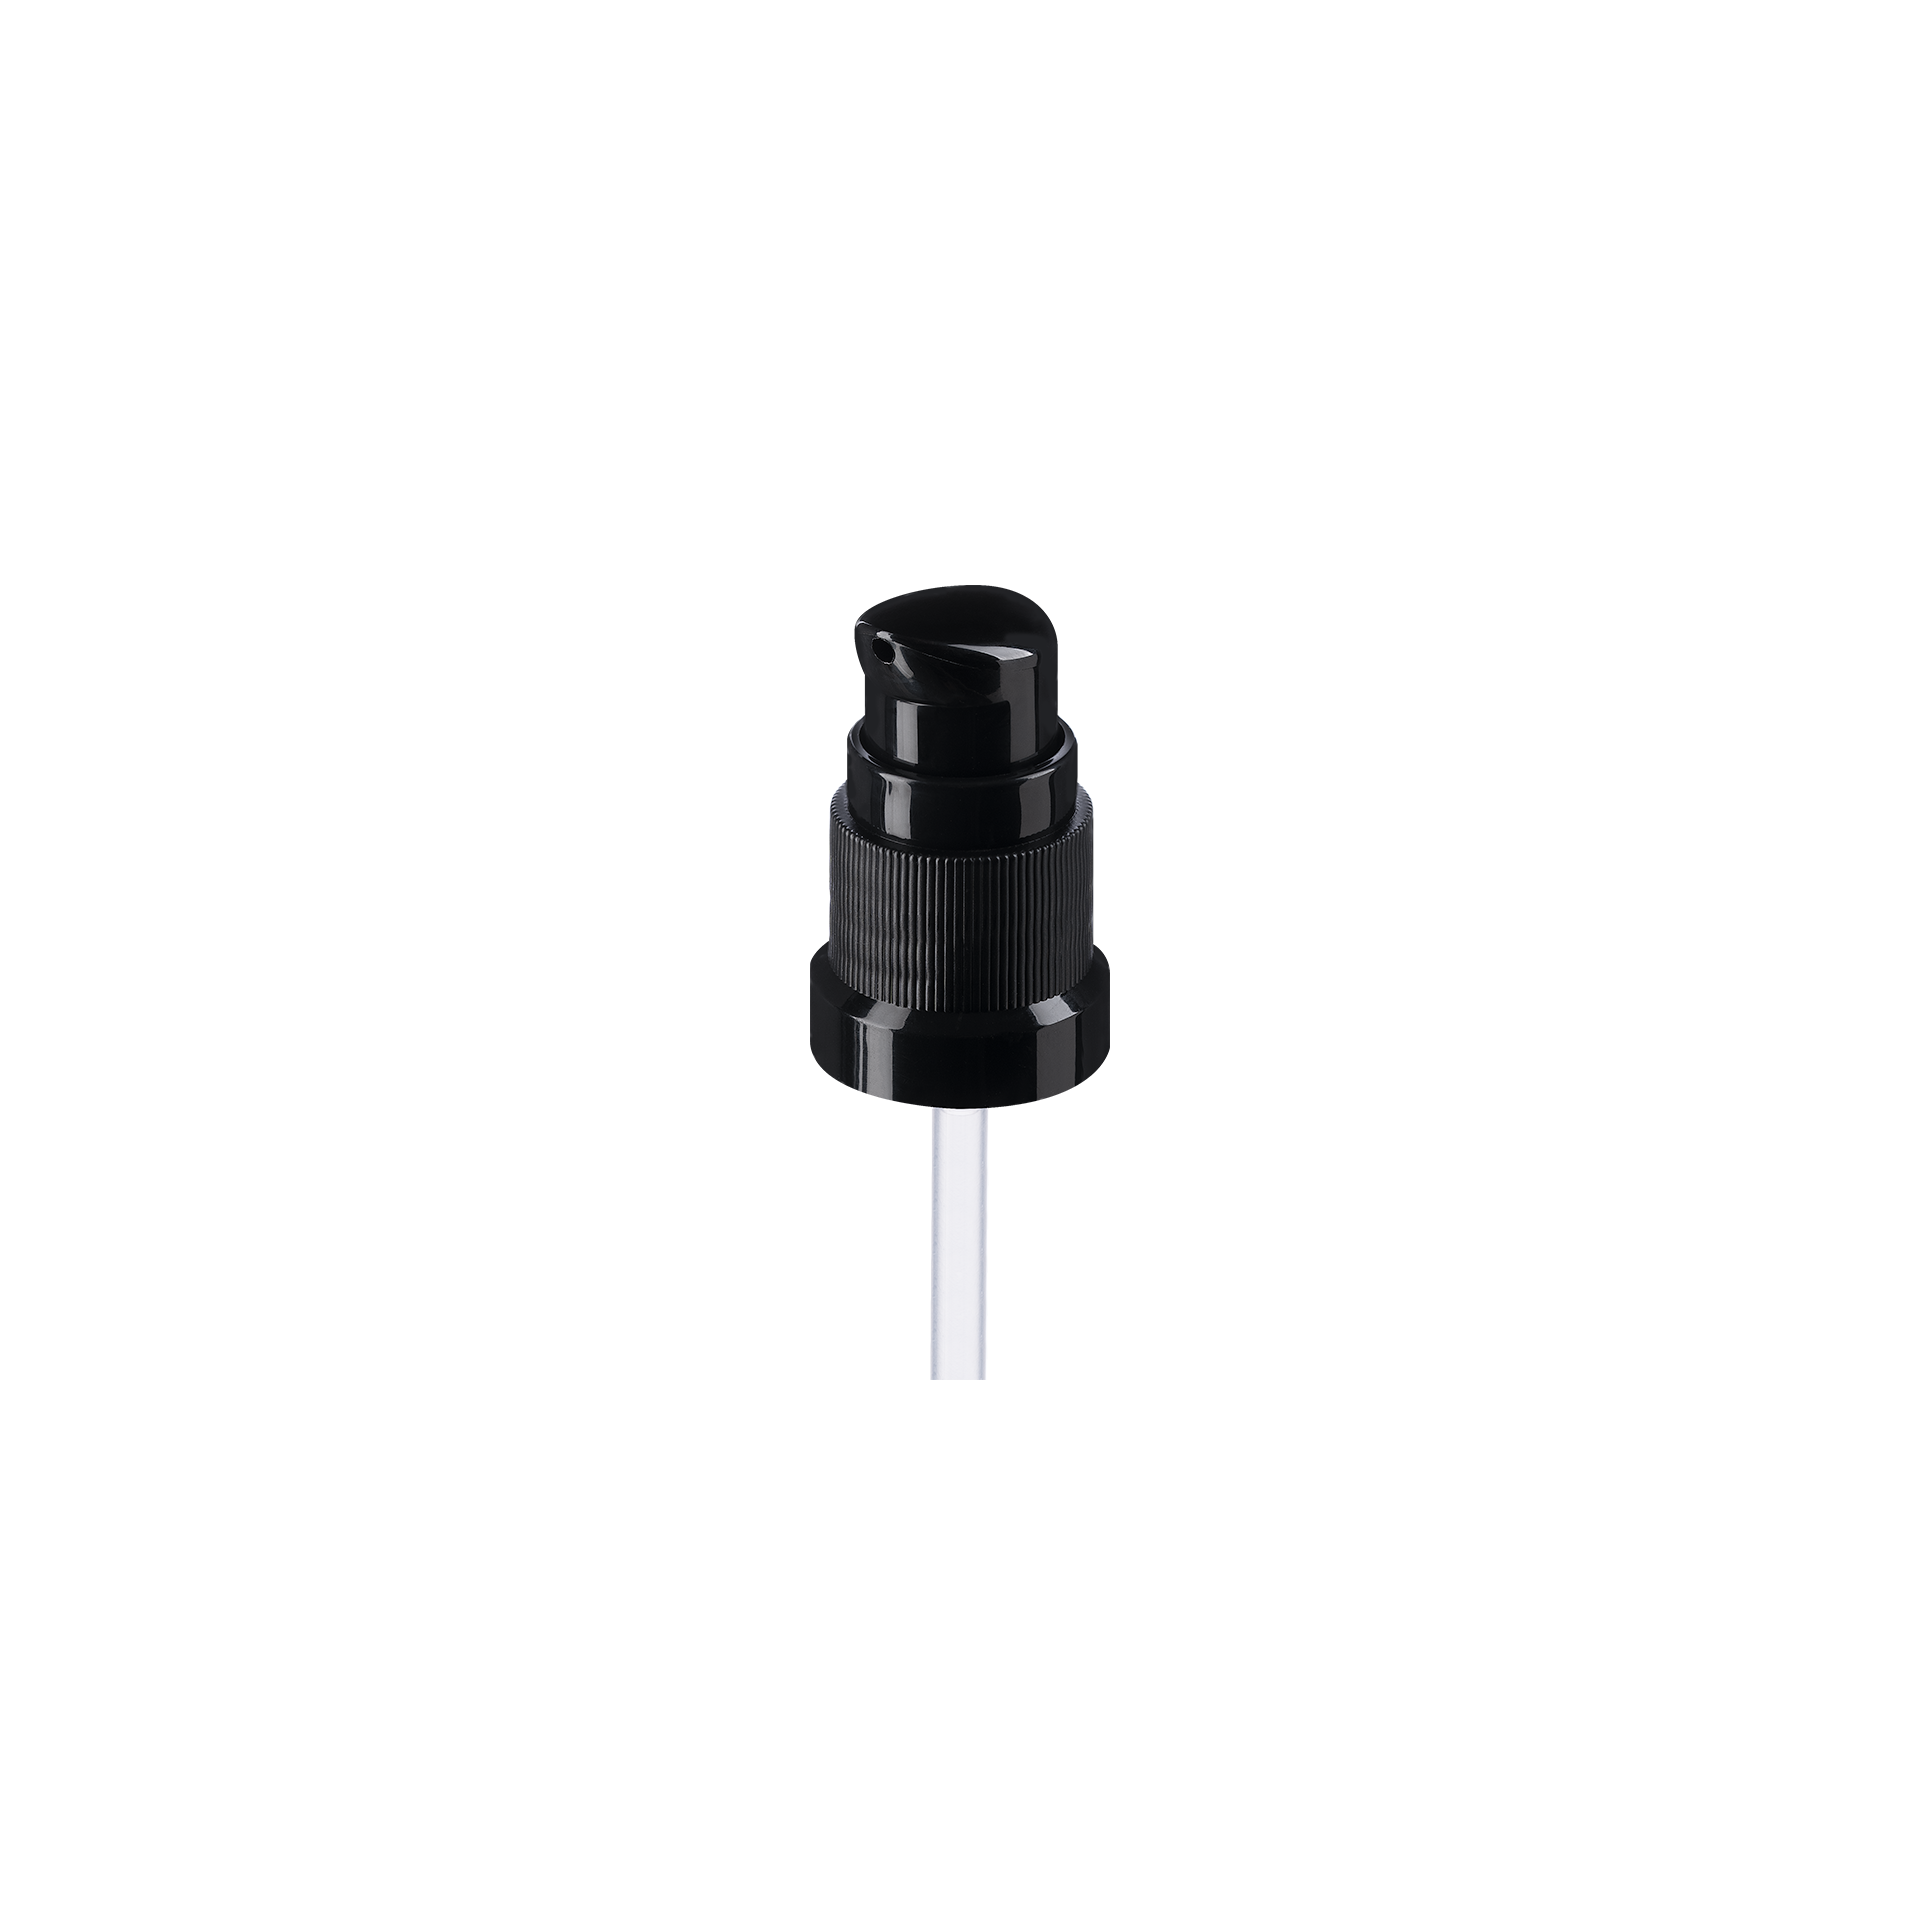 Lotion pump Metropolitan DIN18, PP, black, dose 0.10ml, black security clip (Ginger 60)